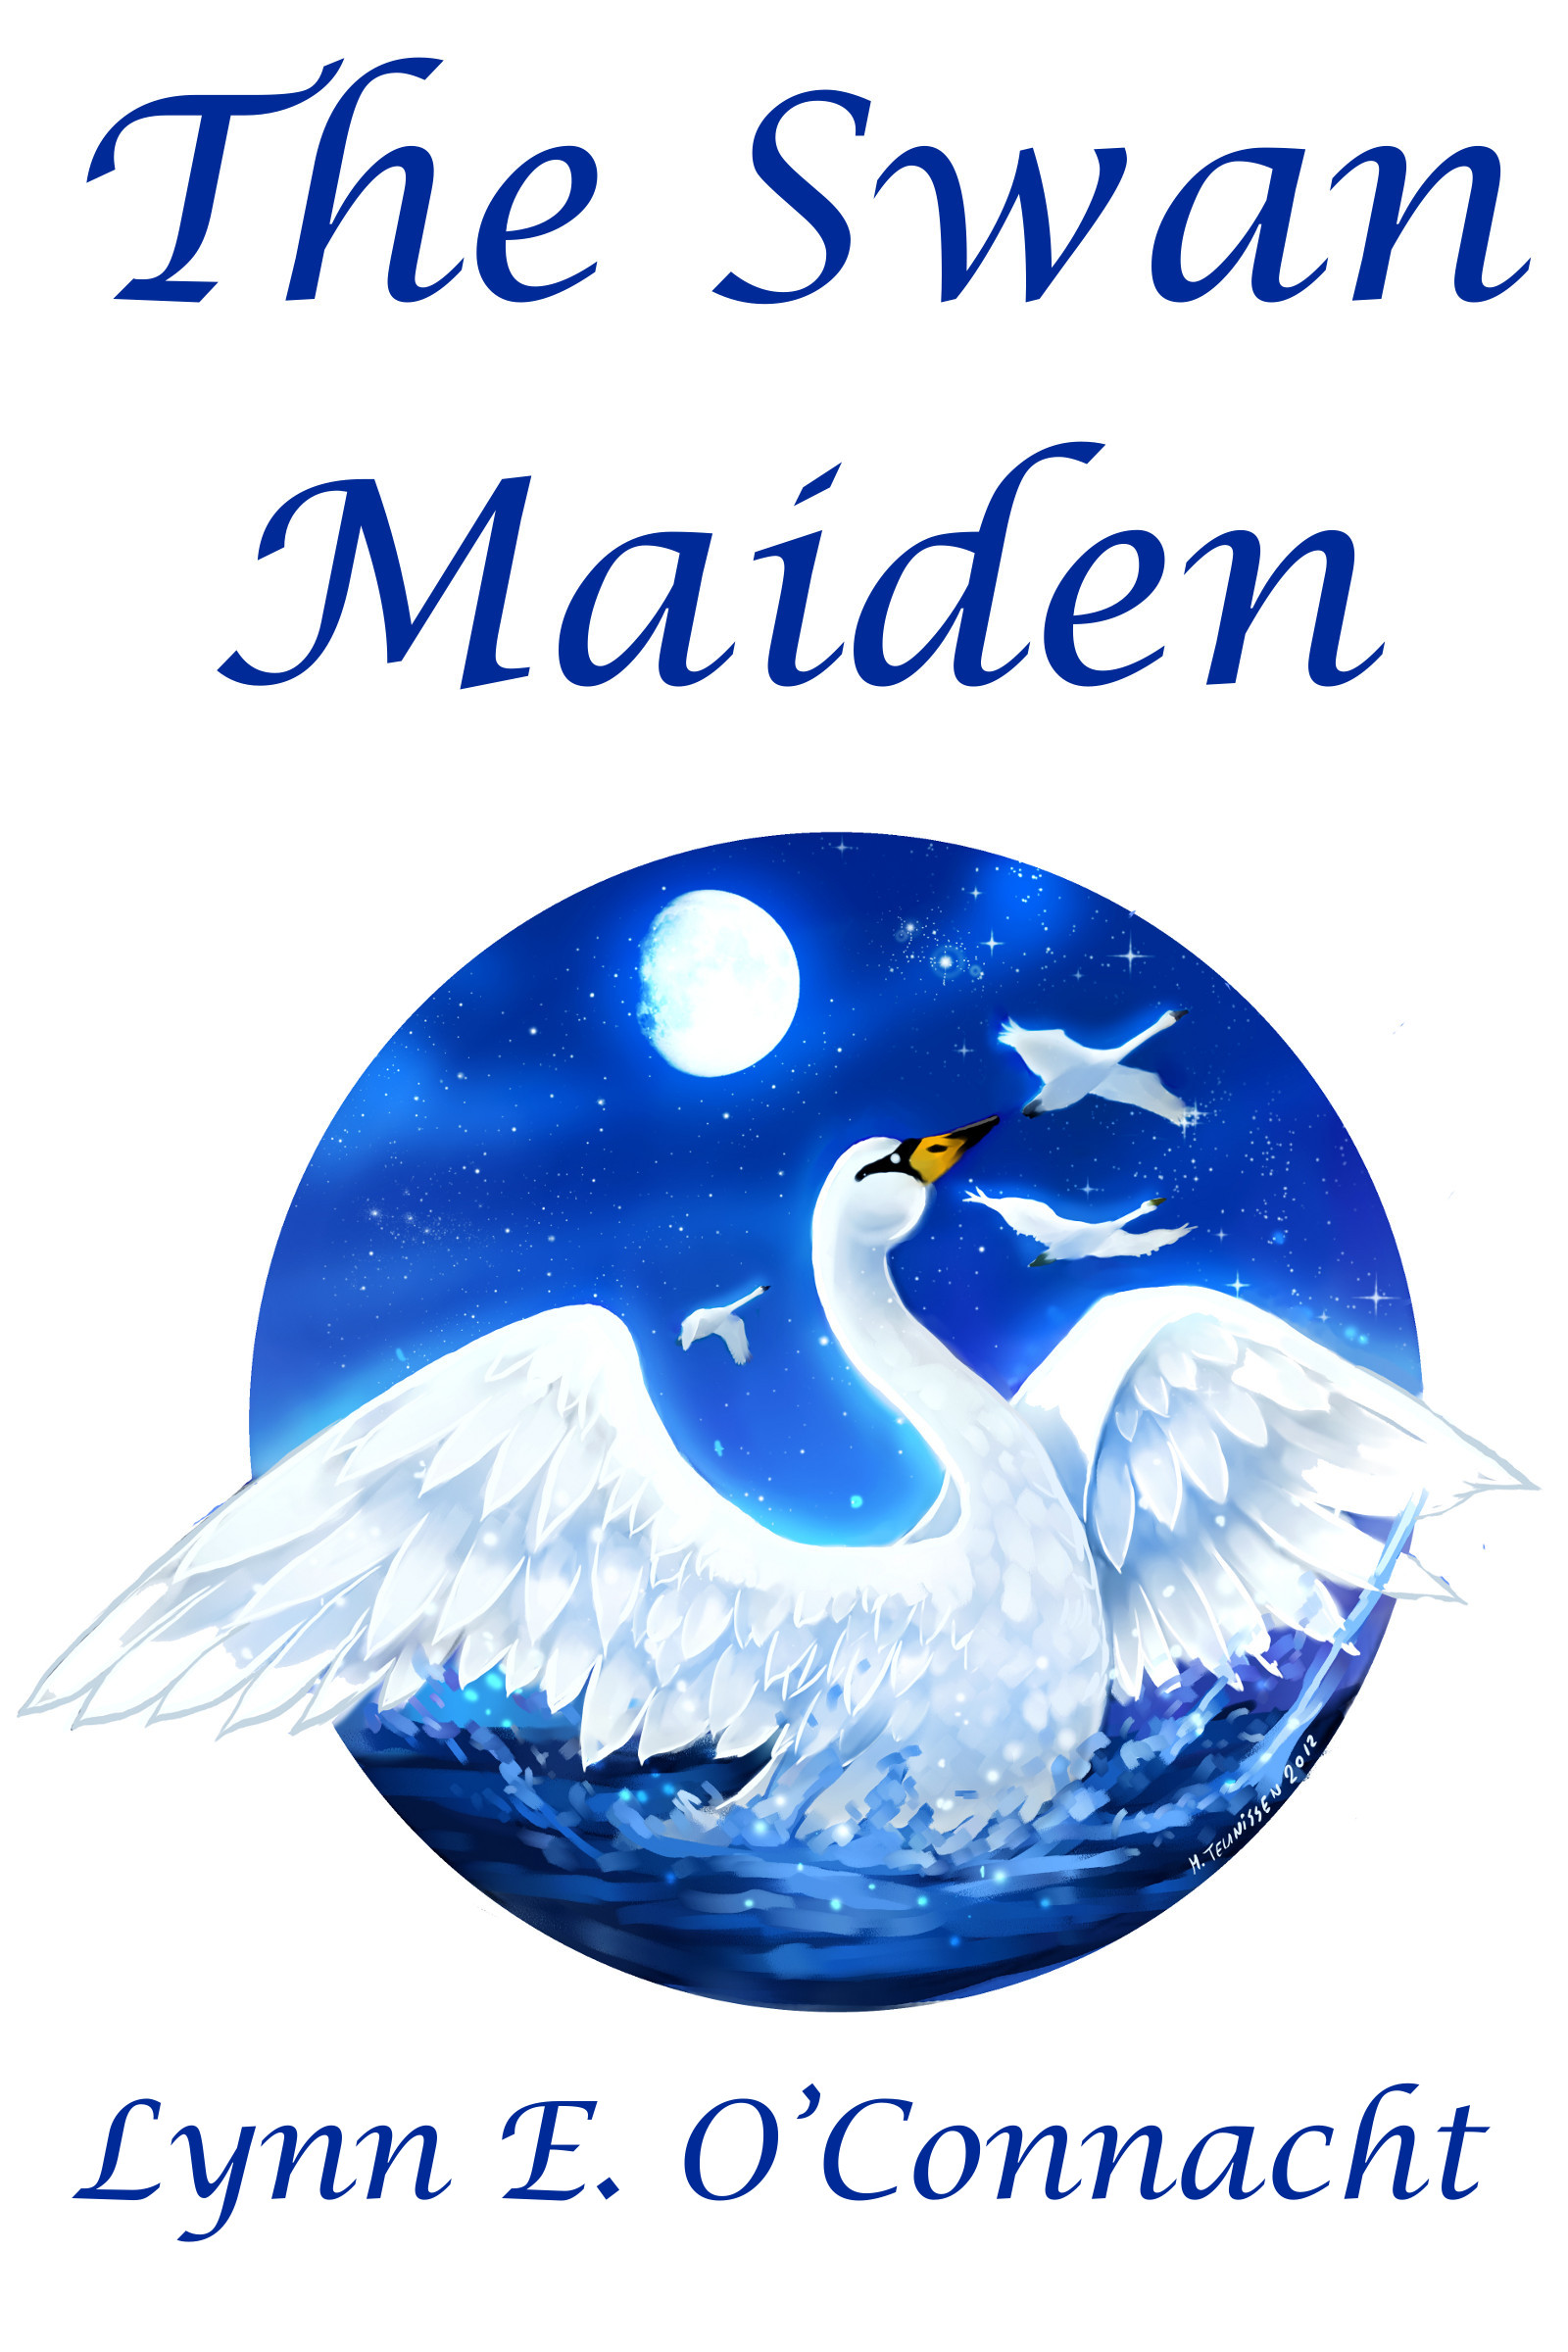 Cover of The Swan Maiden by Lynn E. O'Connacht